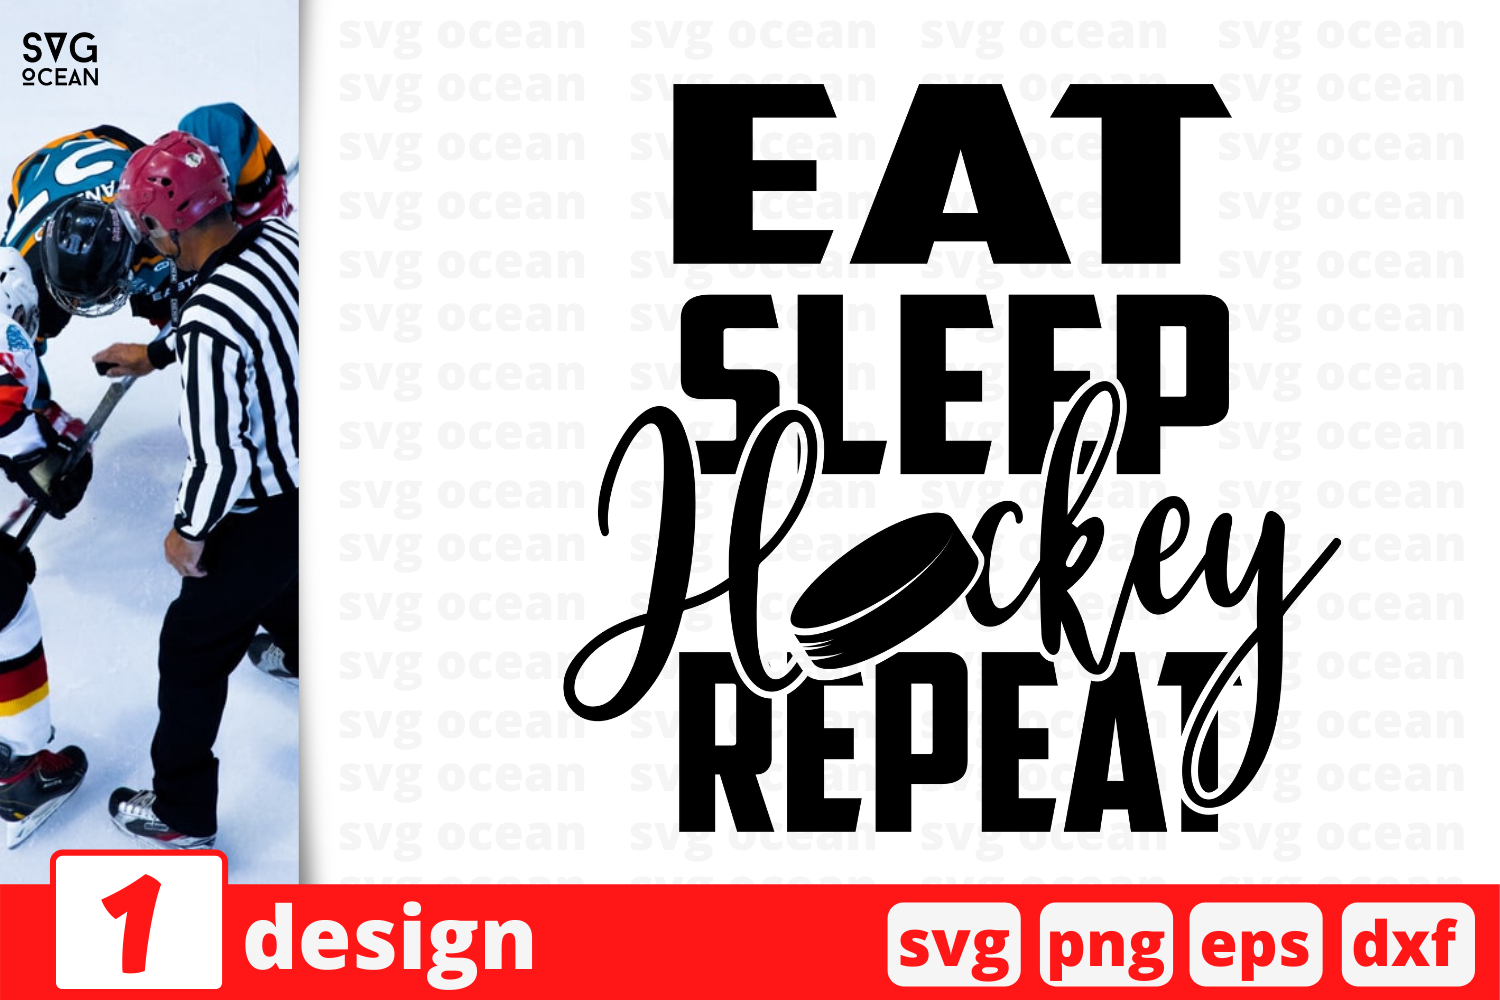 1 EAT SLEEP HOCKEY REPEAT, sport quotes cricut svg By SvgOcean